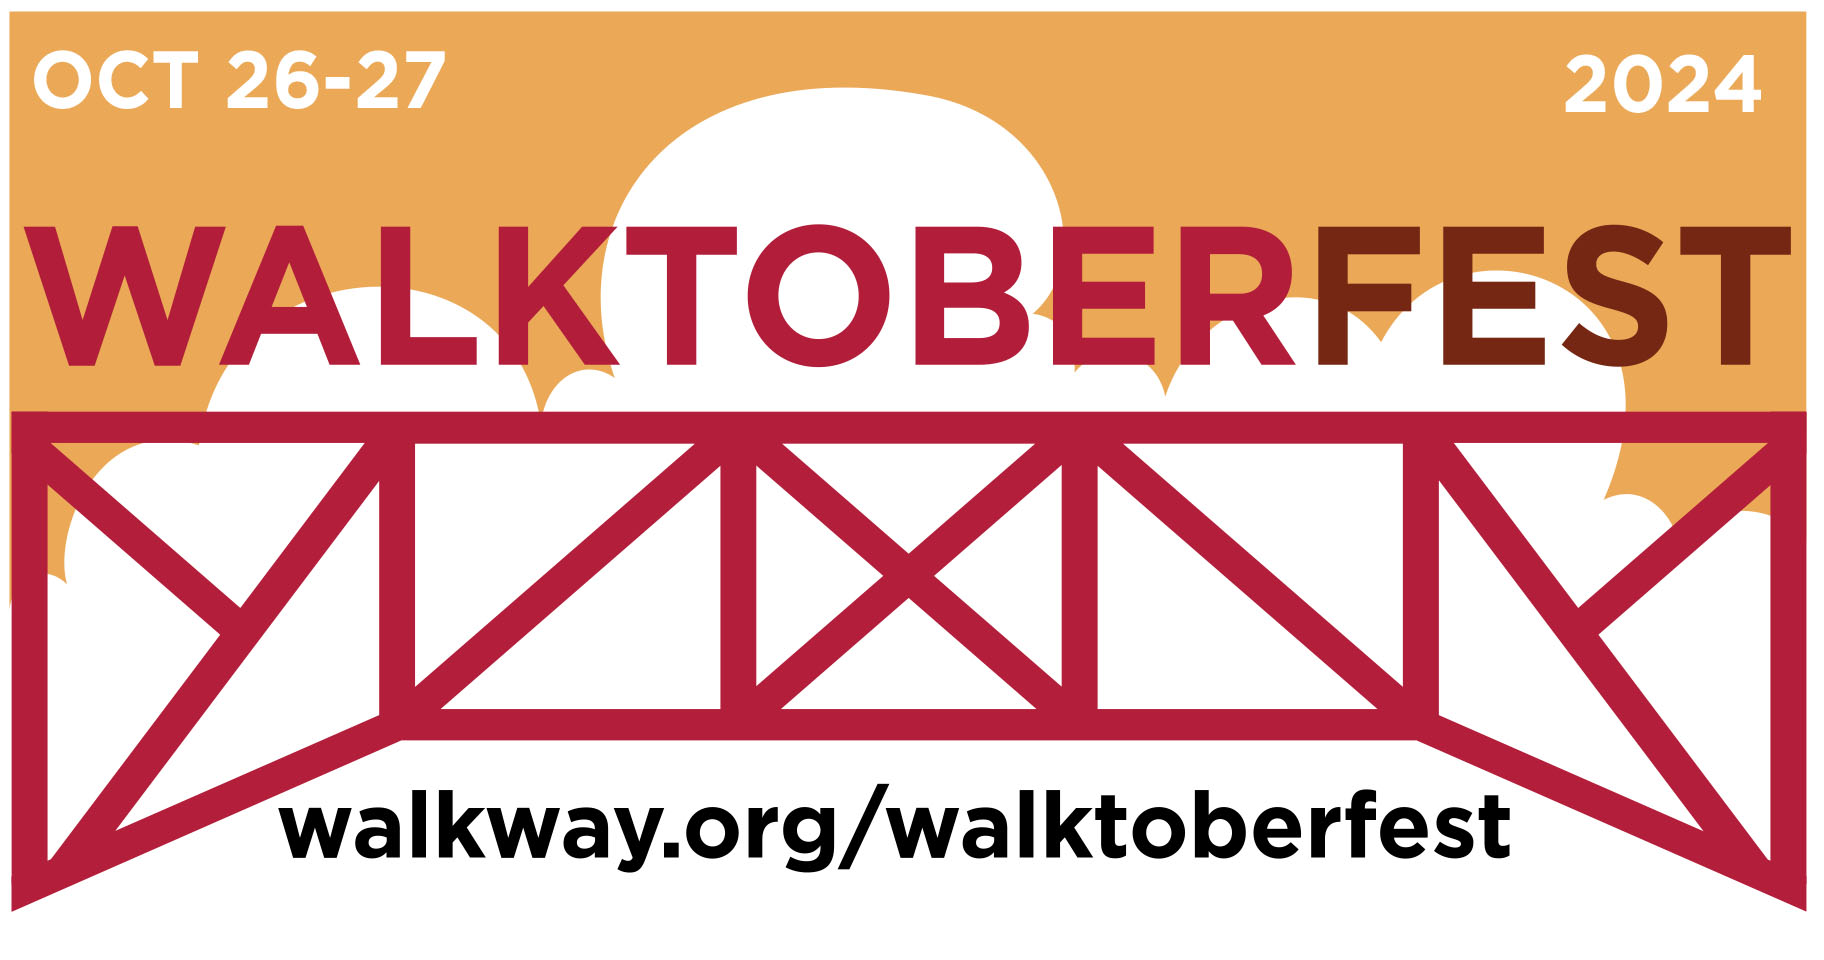 Walktoberfest event logo